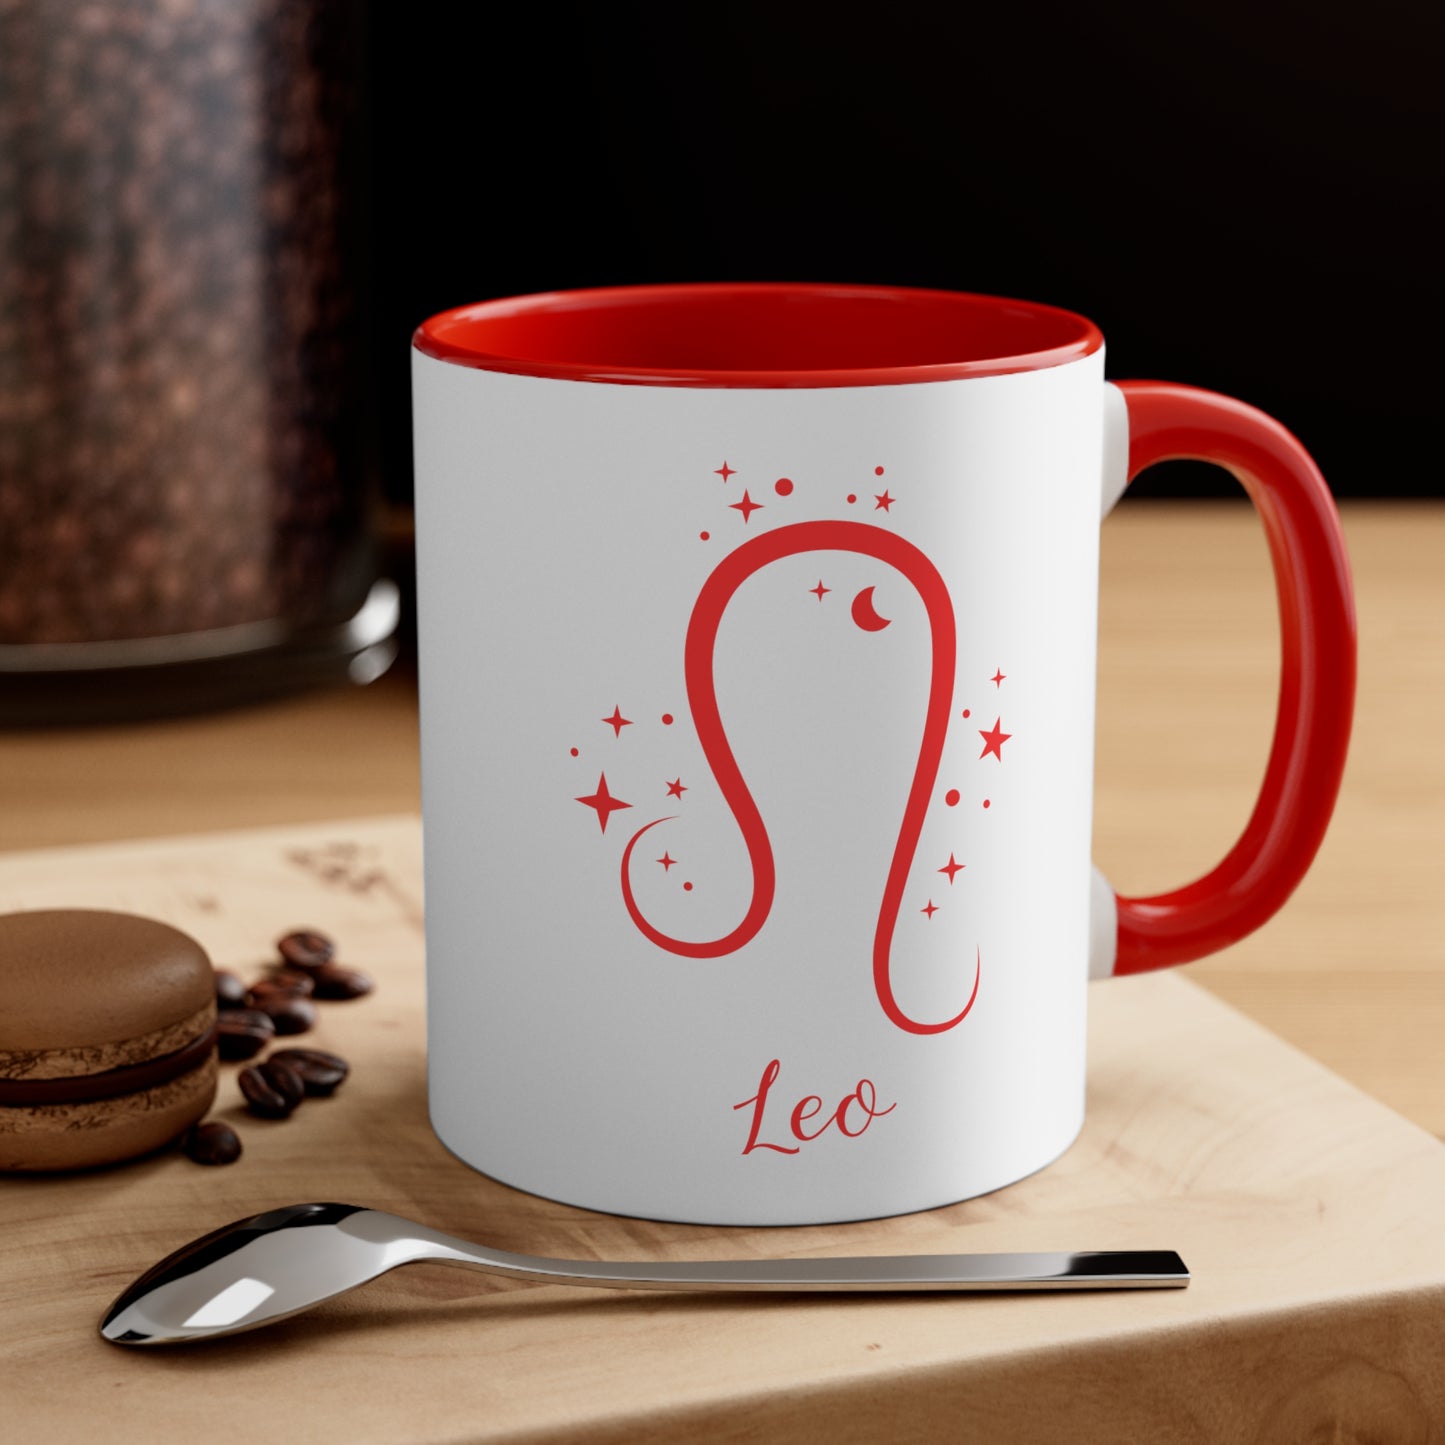 Leo glyph & stars coffee mug